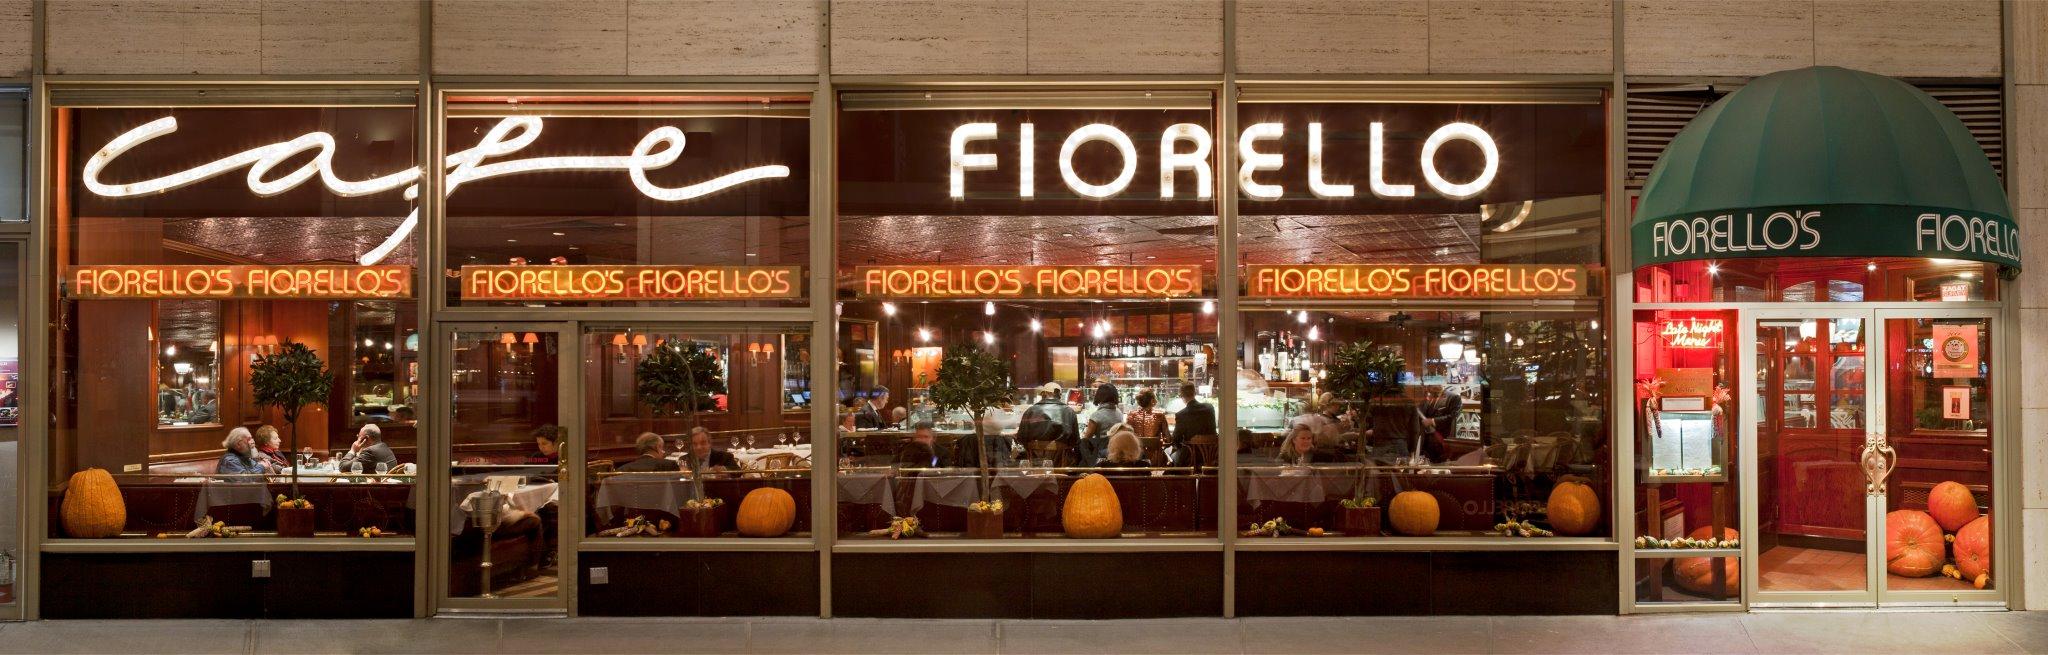 Pet Friendly Cafe Fiorello